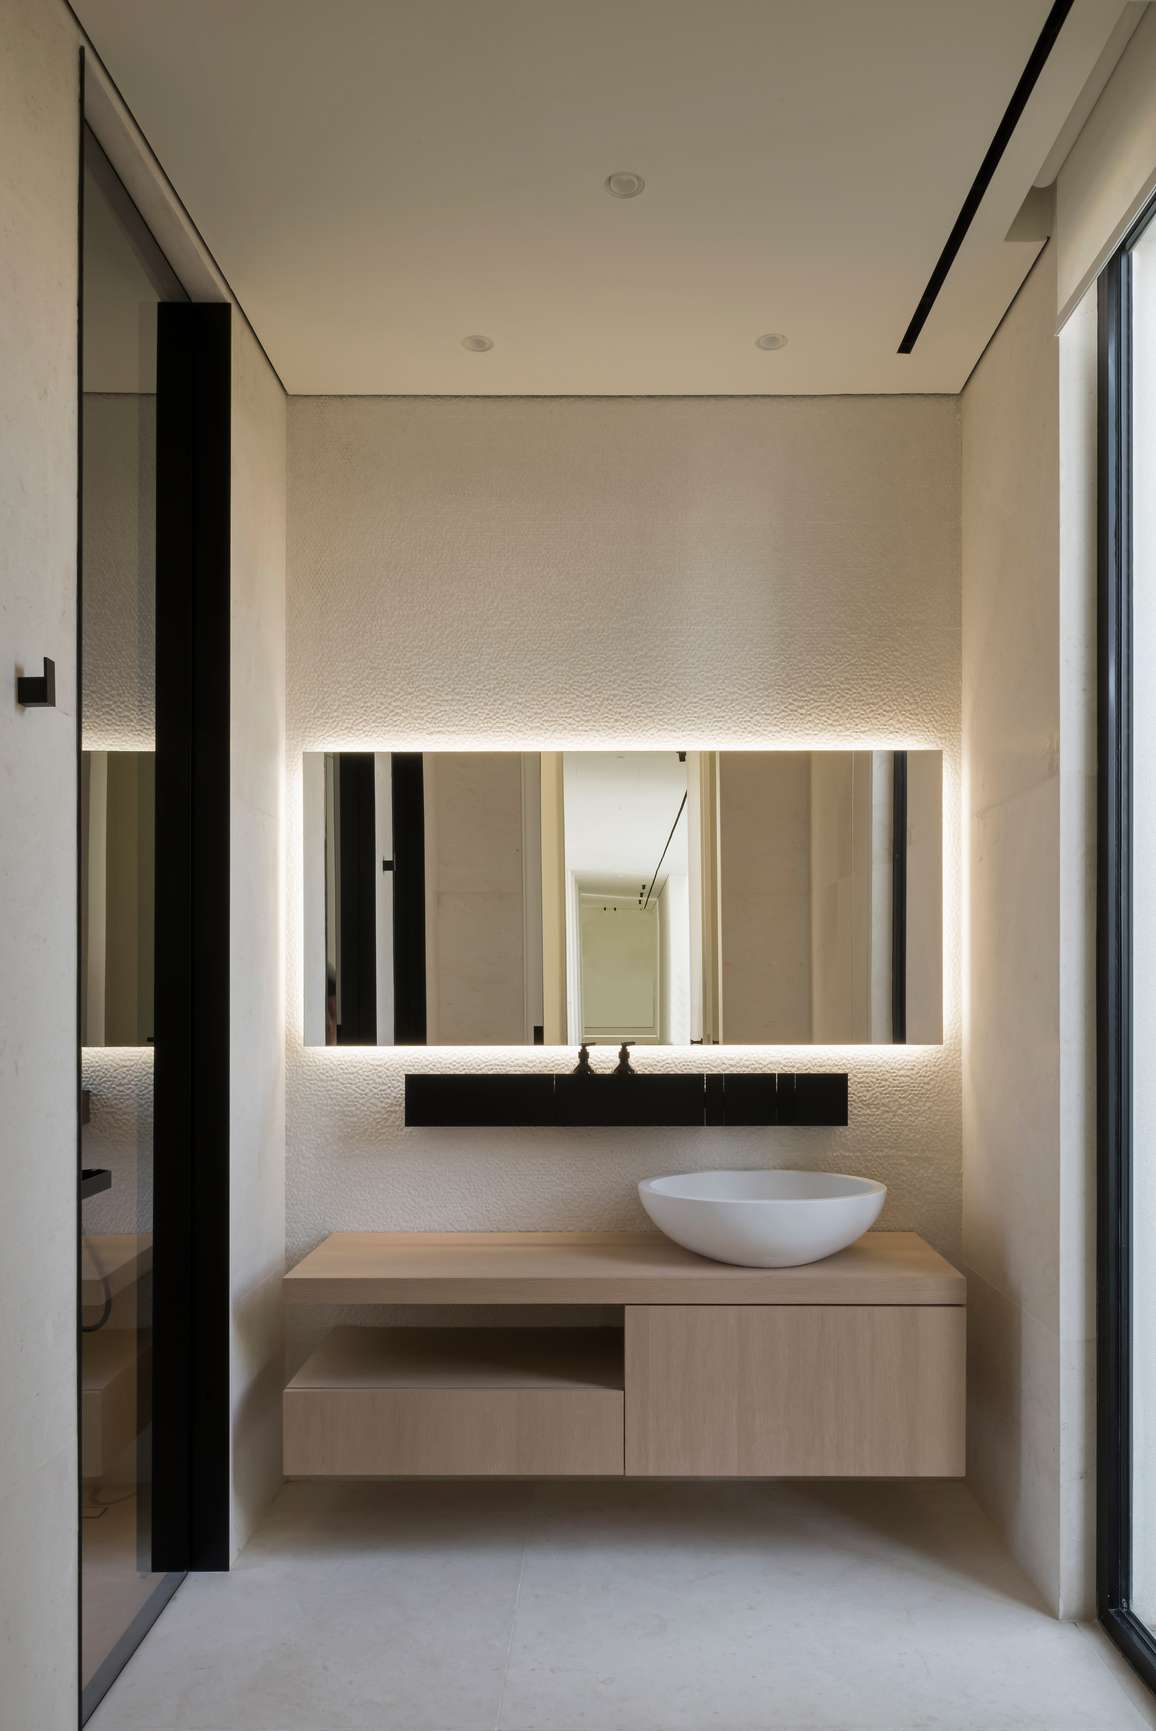 Salle de bains luxueuse avec un grand miroir rectangulaire